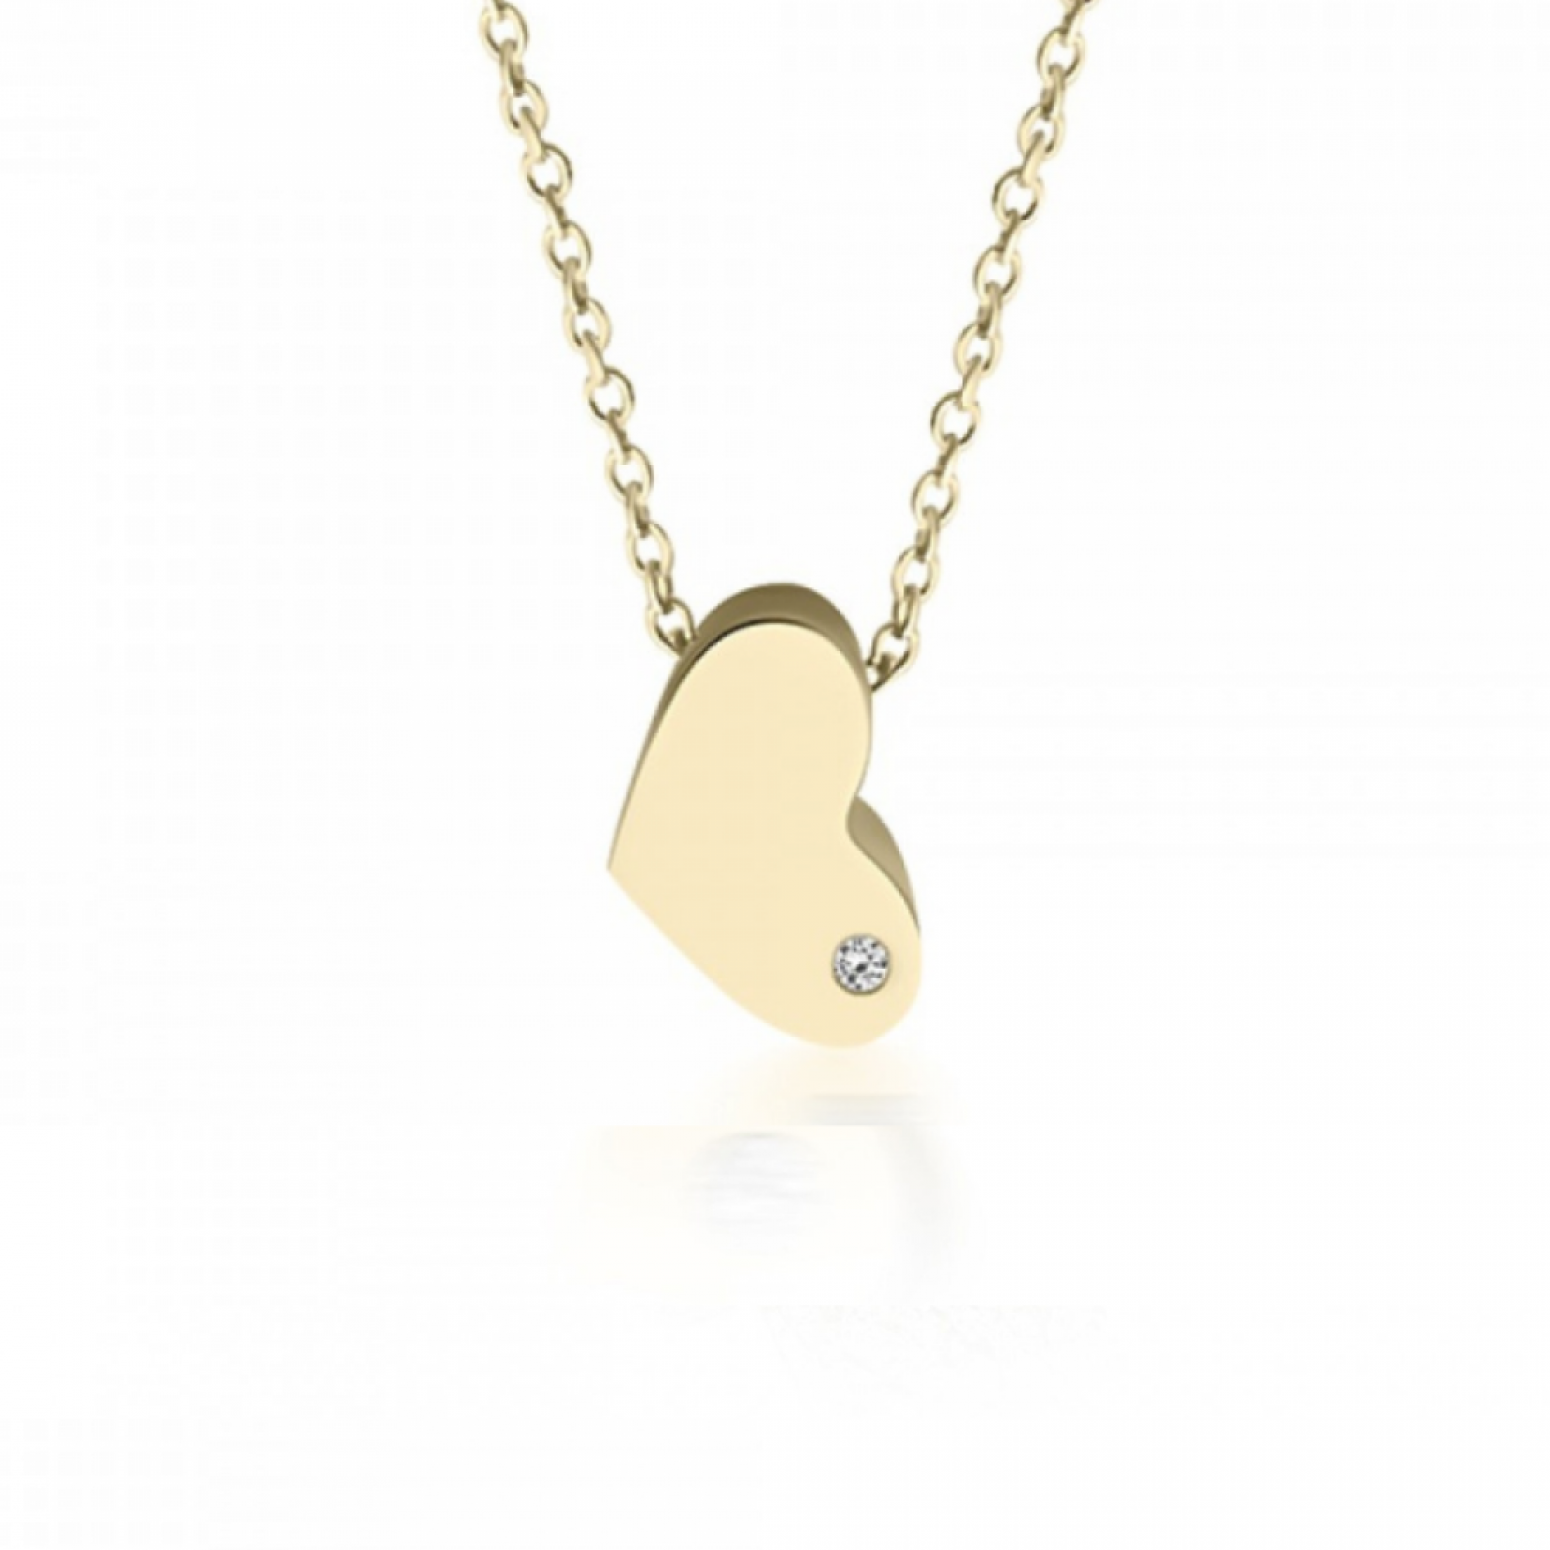 Heart necklace, Κ9 gold with zircon, ko5470 NECKLACES Κοσμηματα - chrilia.gr